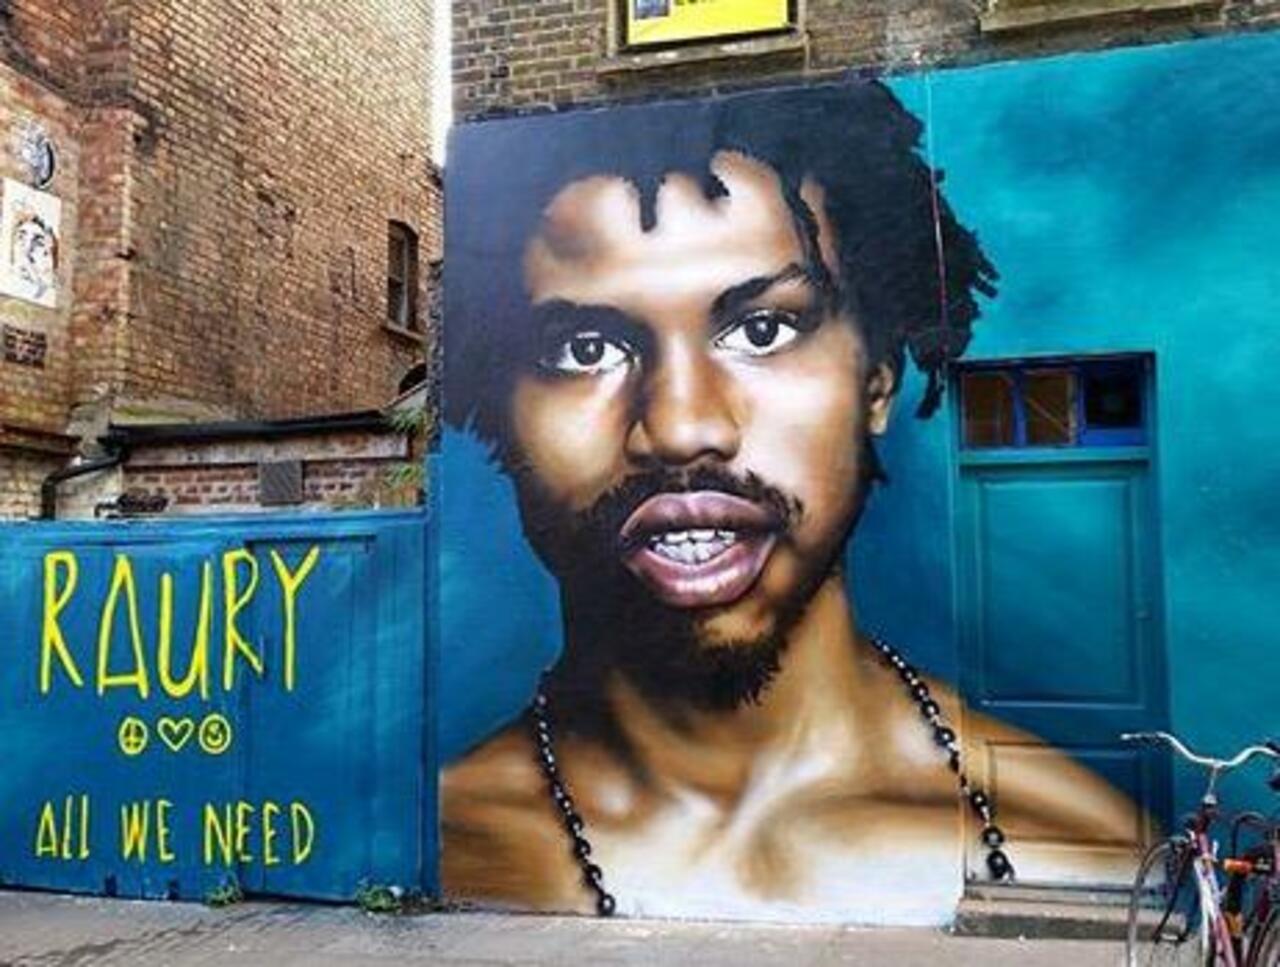 New Street Art of Raury by Olliver Switch in Brick Lane 

#art #graffiti #mural #streetart http://t.co/1mVNGdlLtP